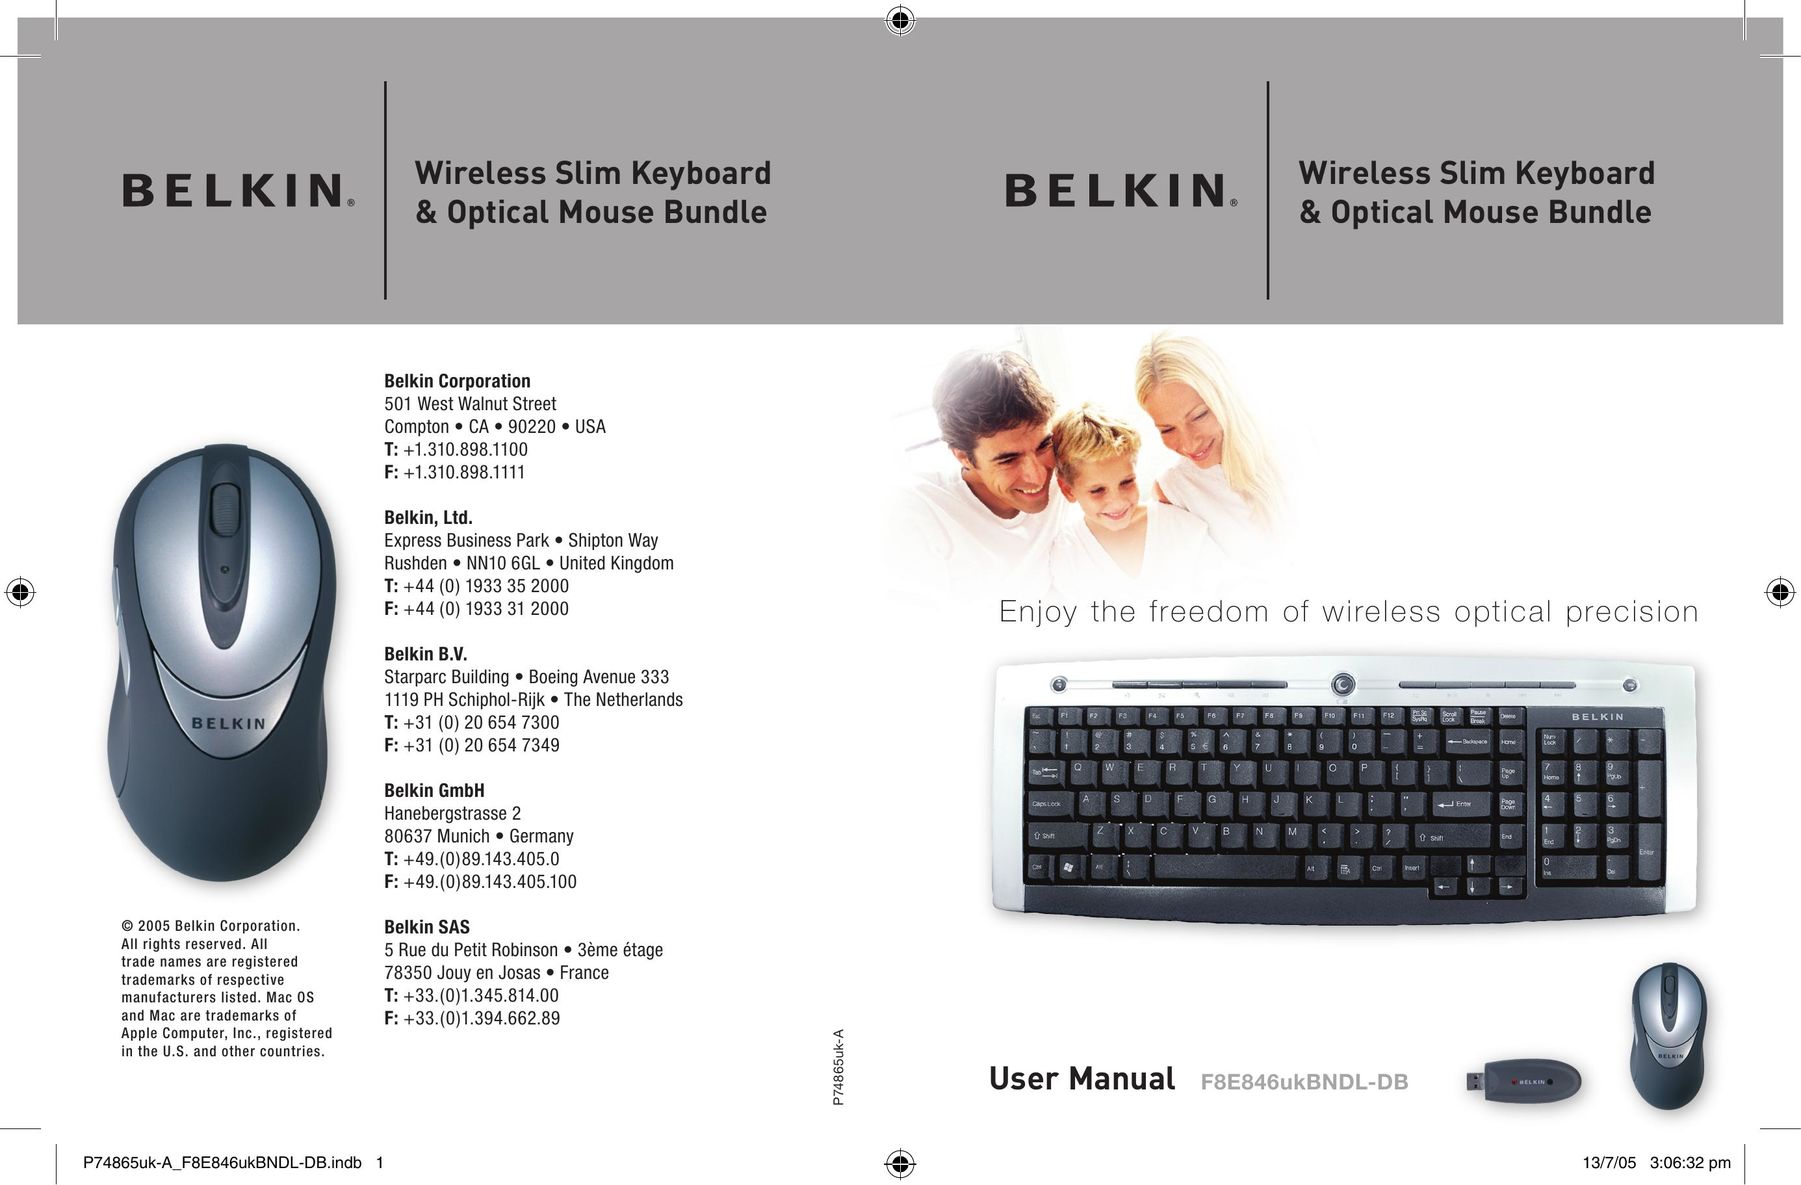 Belkin F8E846UKBNDL-DB Computer Keyboard User Manual